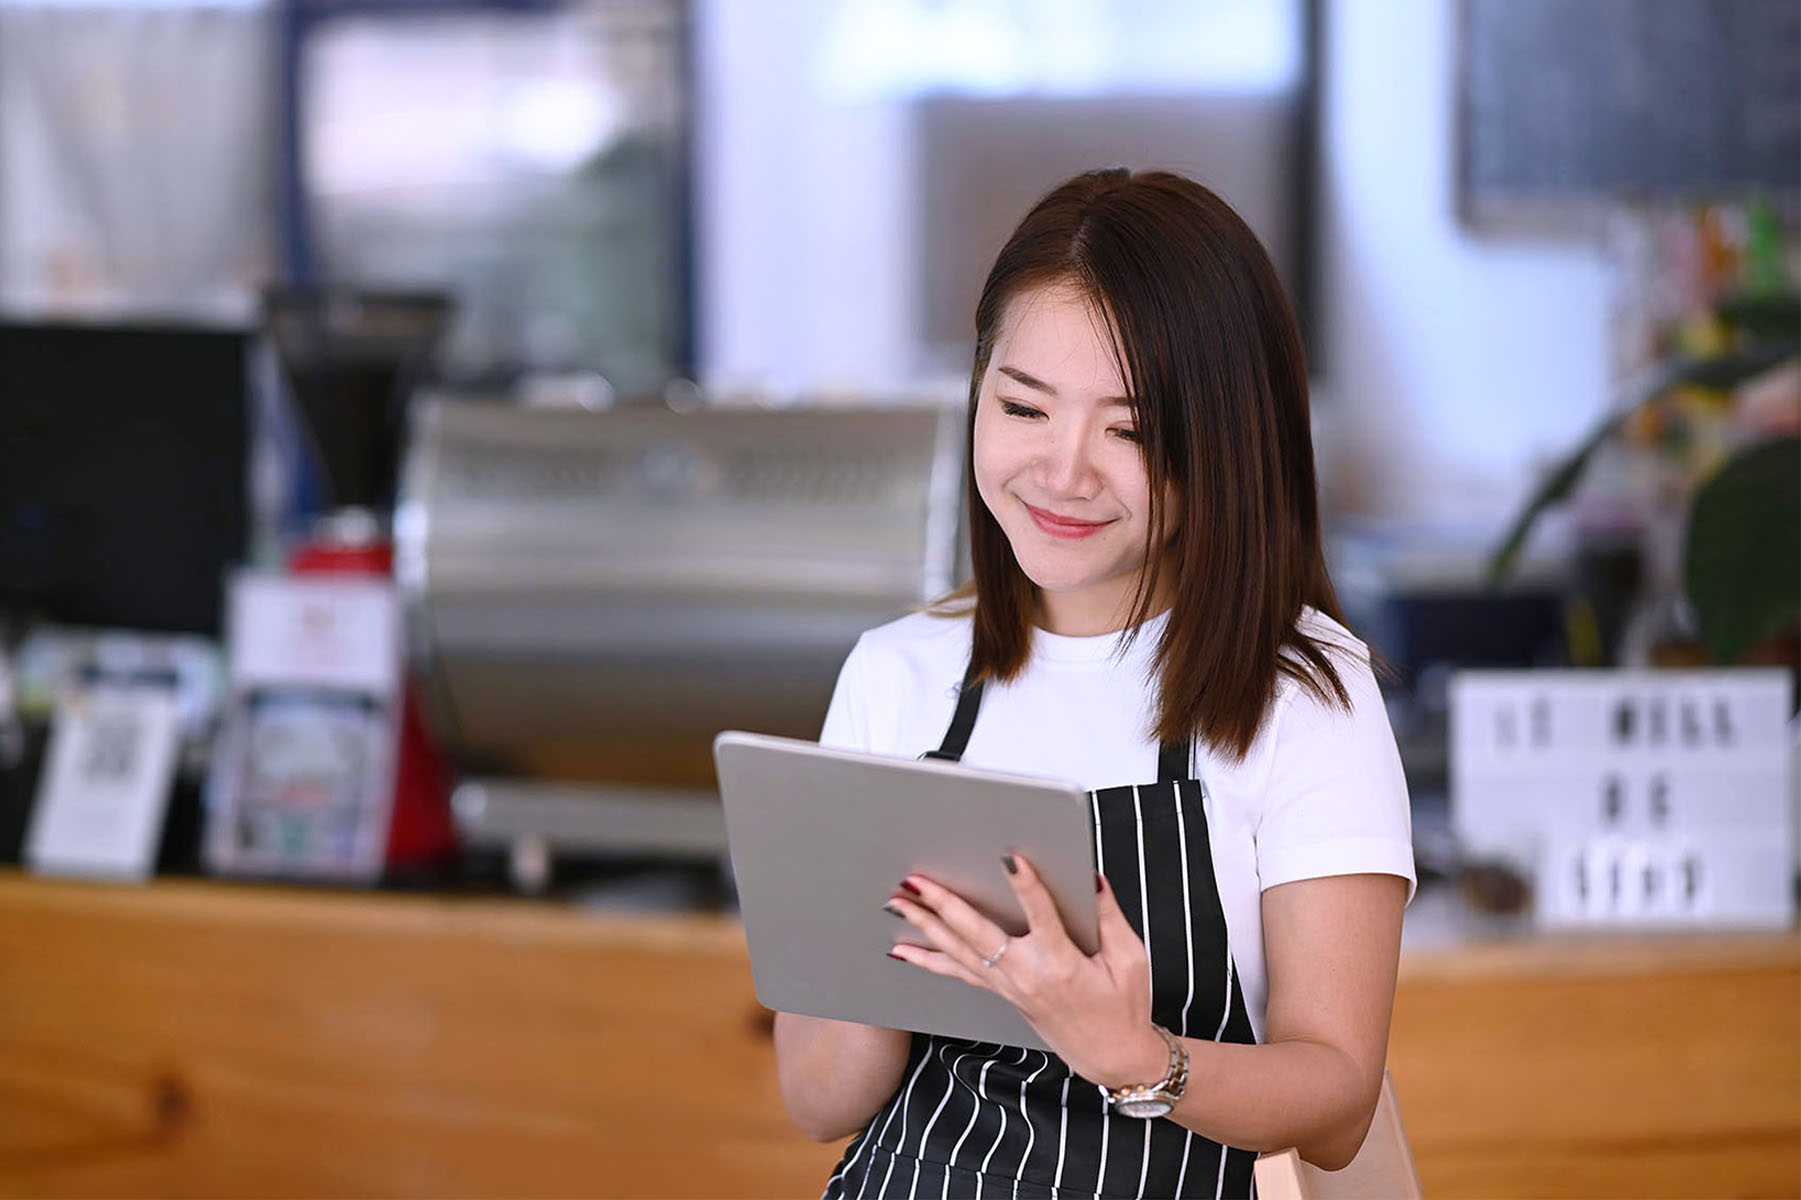 Cutout photo of a waitress looking down at a tablet.